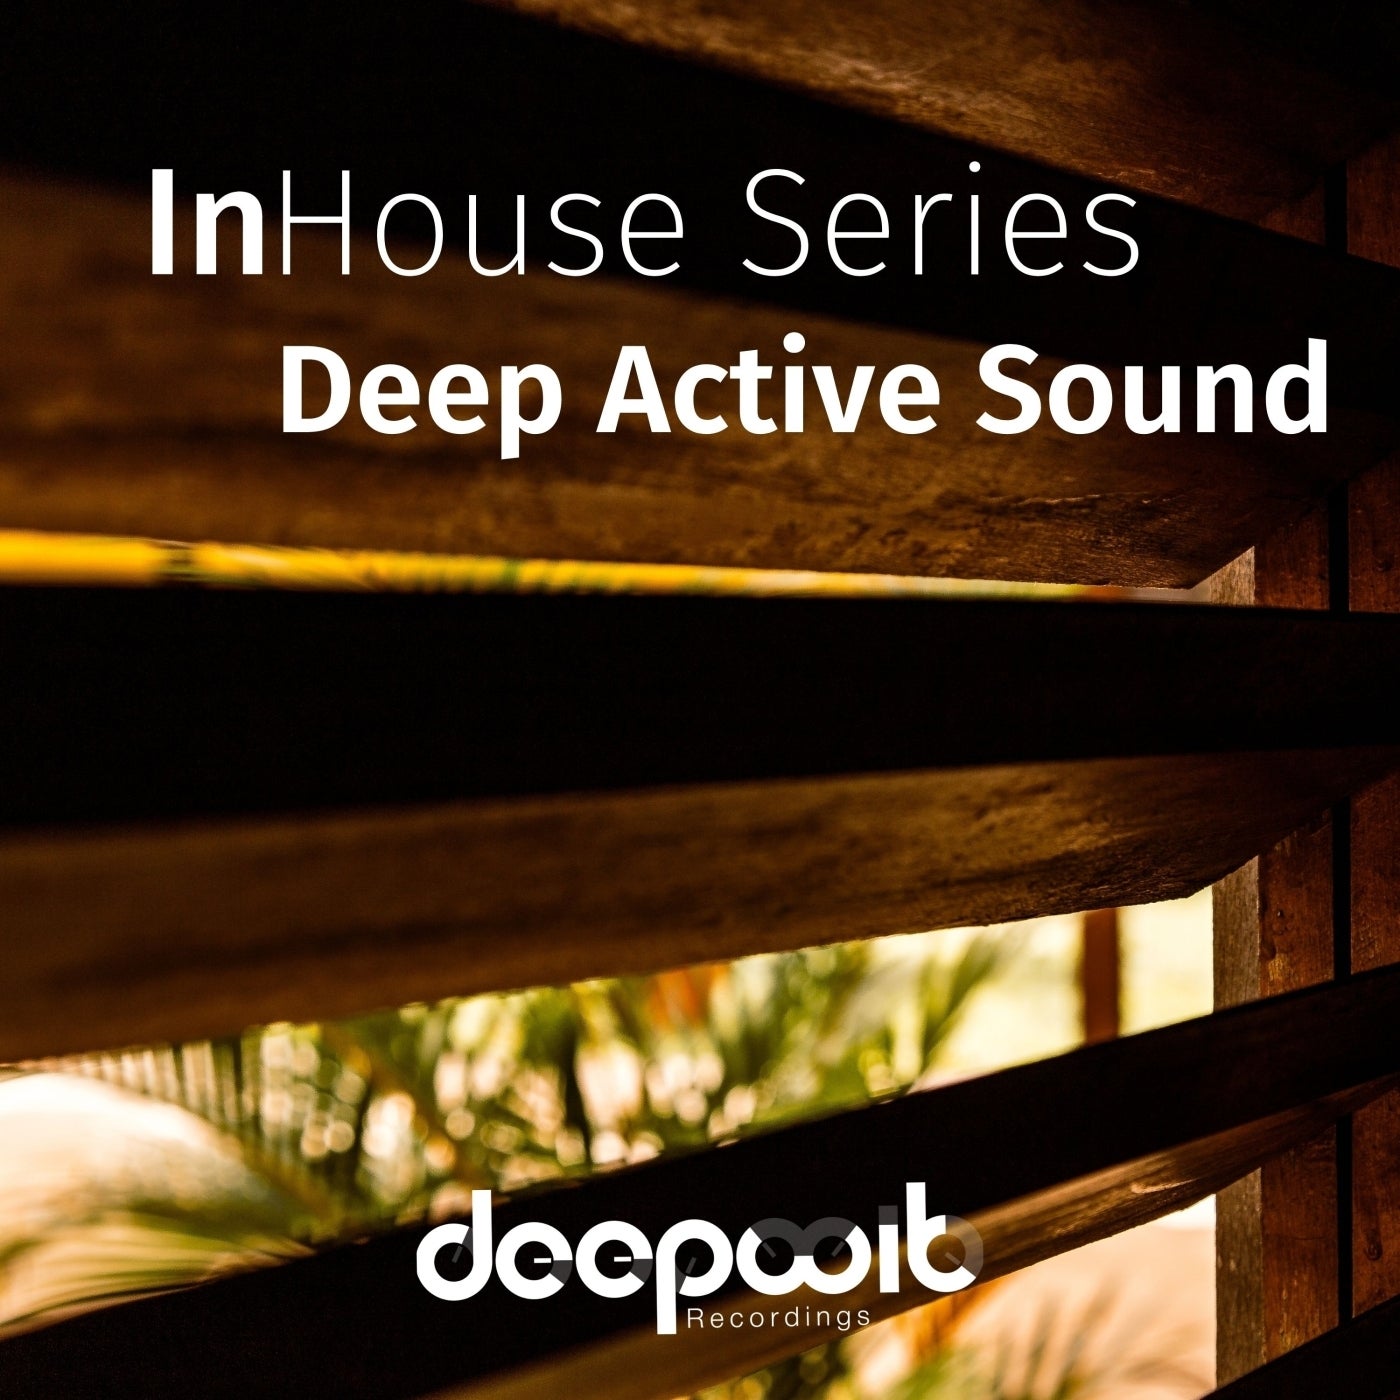 InHouse Series Deep Active Sound